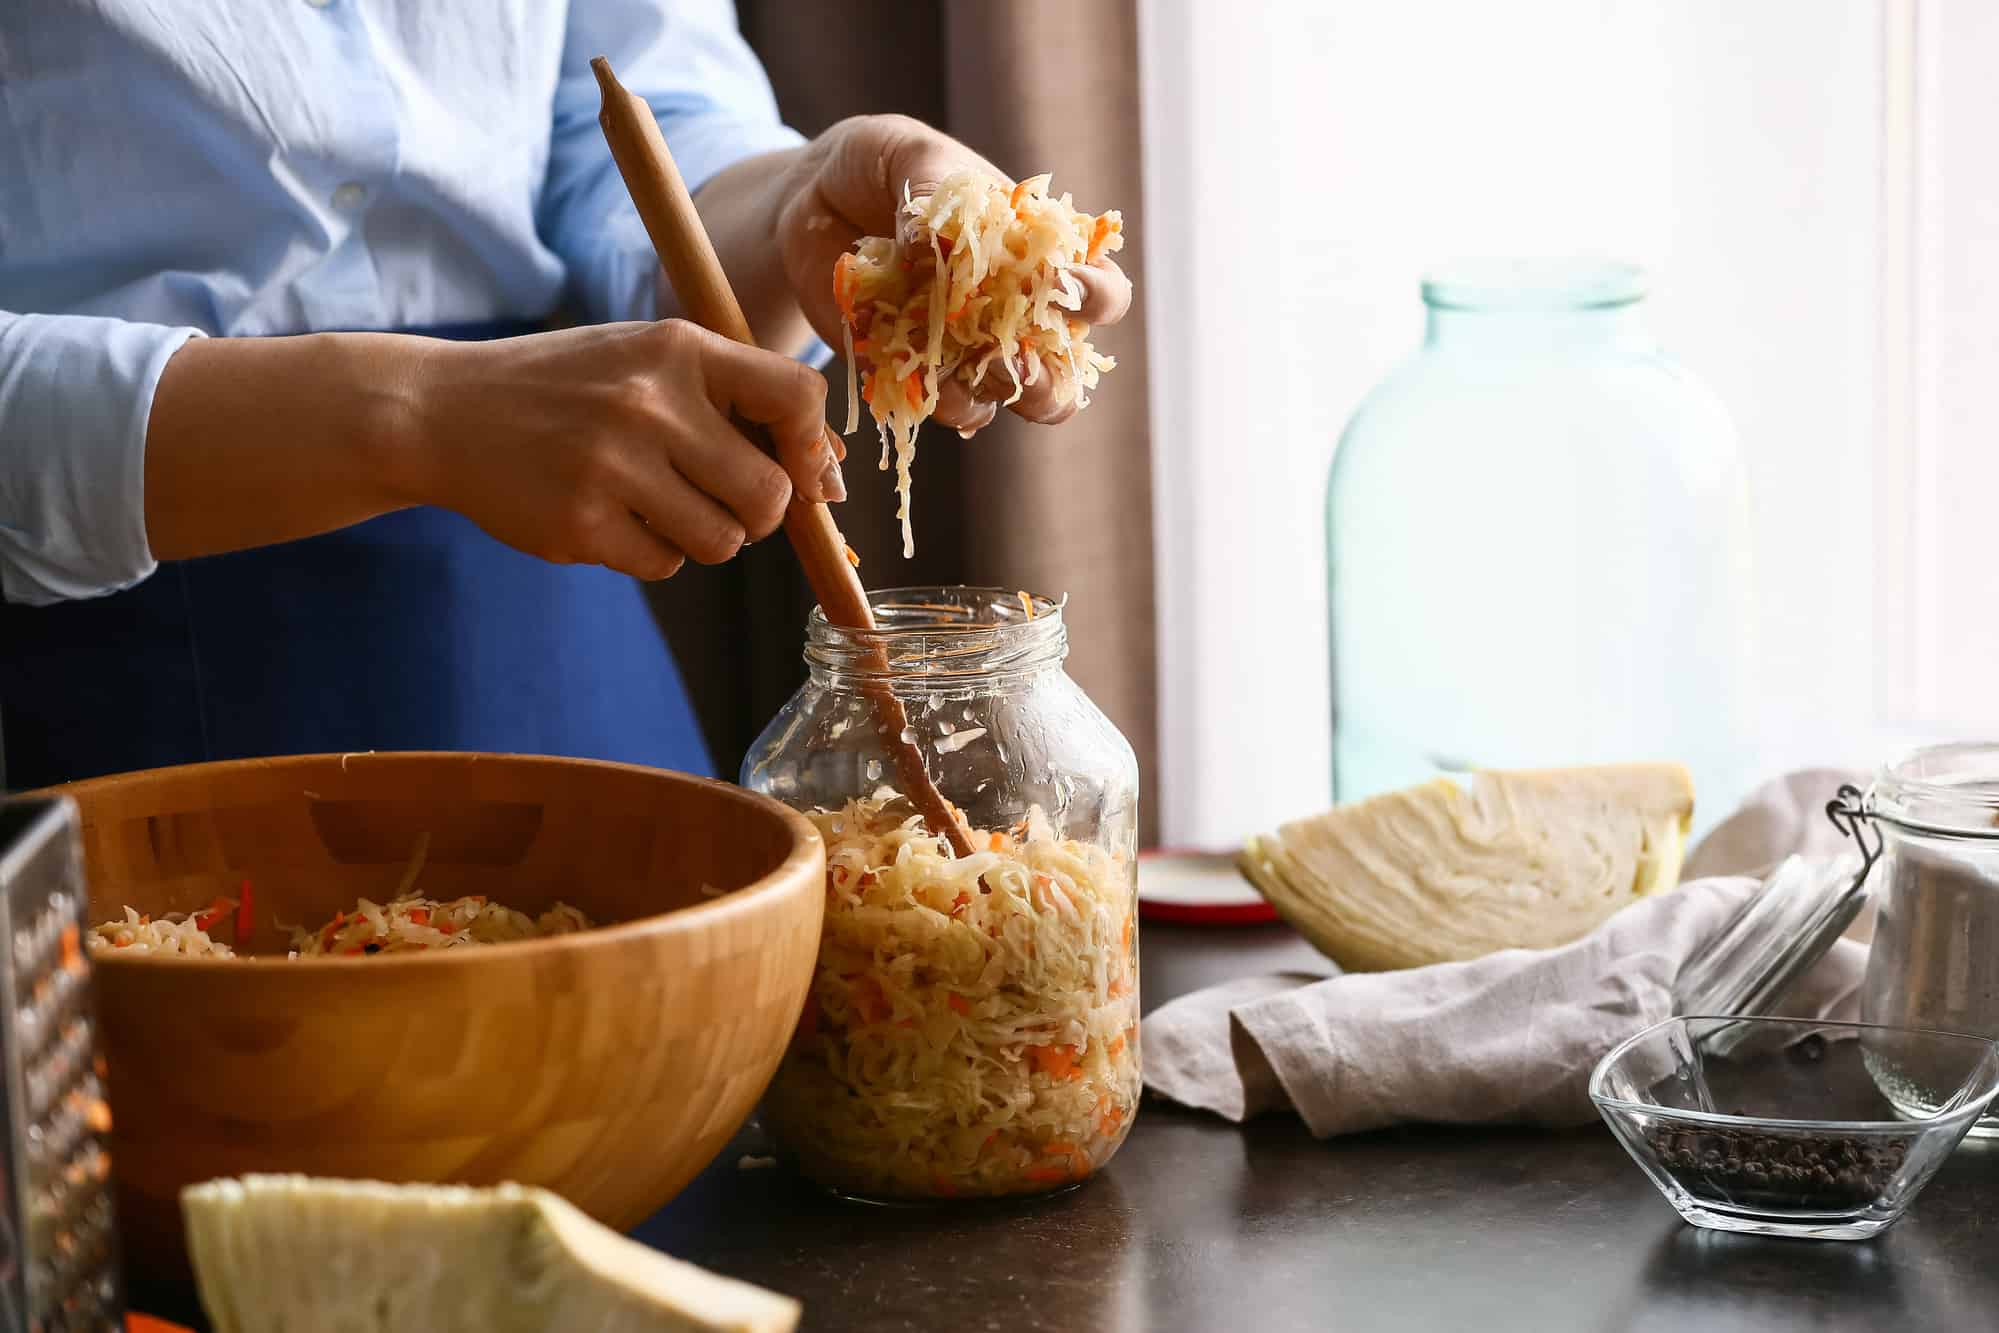 Woman putting tasty sauerkraut into glass jar on table in kitchen, closeup.